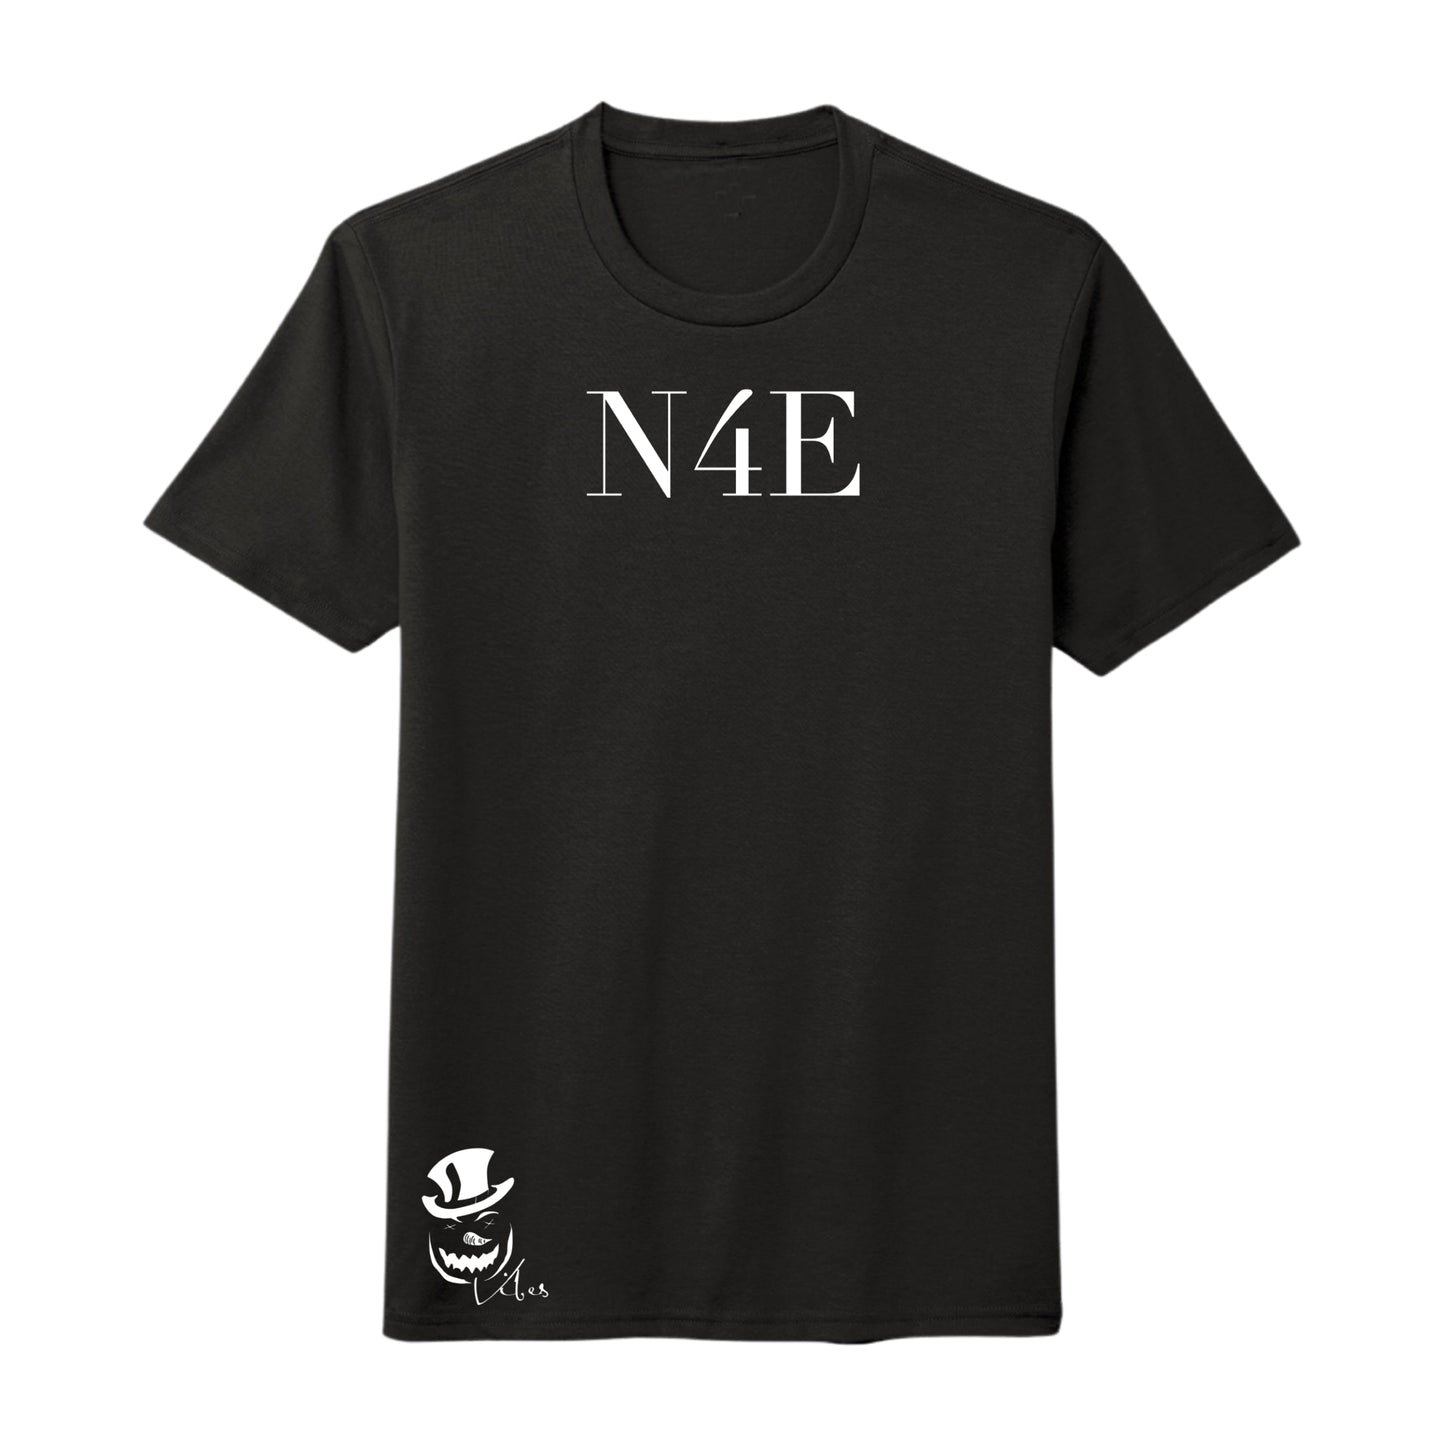 N4E “Not For Everyone” Tee